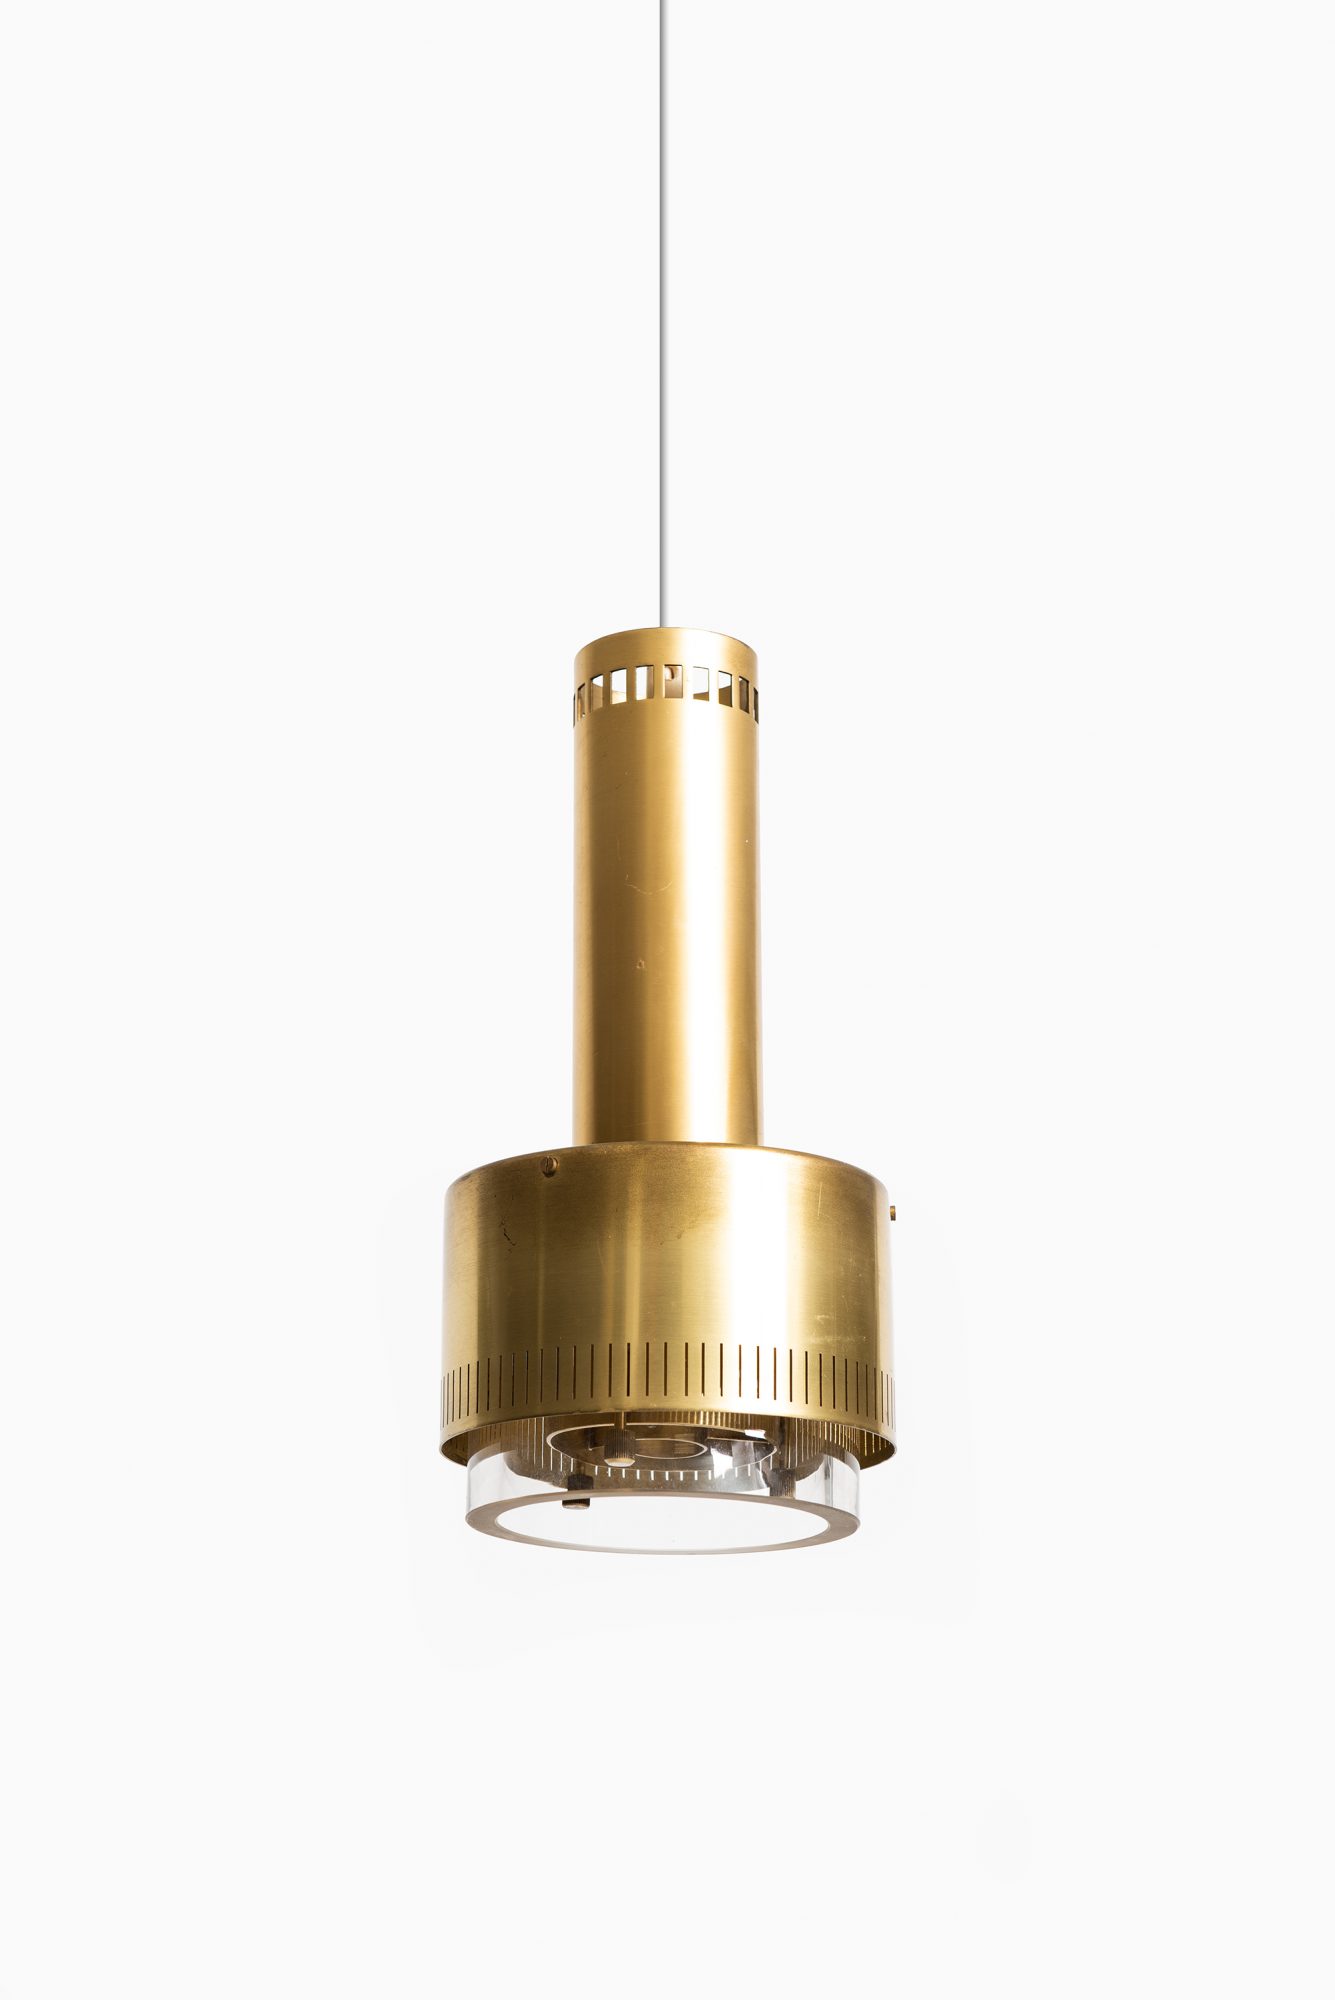 Kay Kørbing ceiling lamp in brass by Lyfa at Studio Schalling